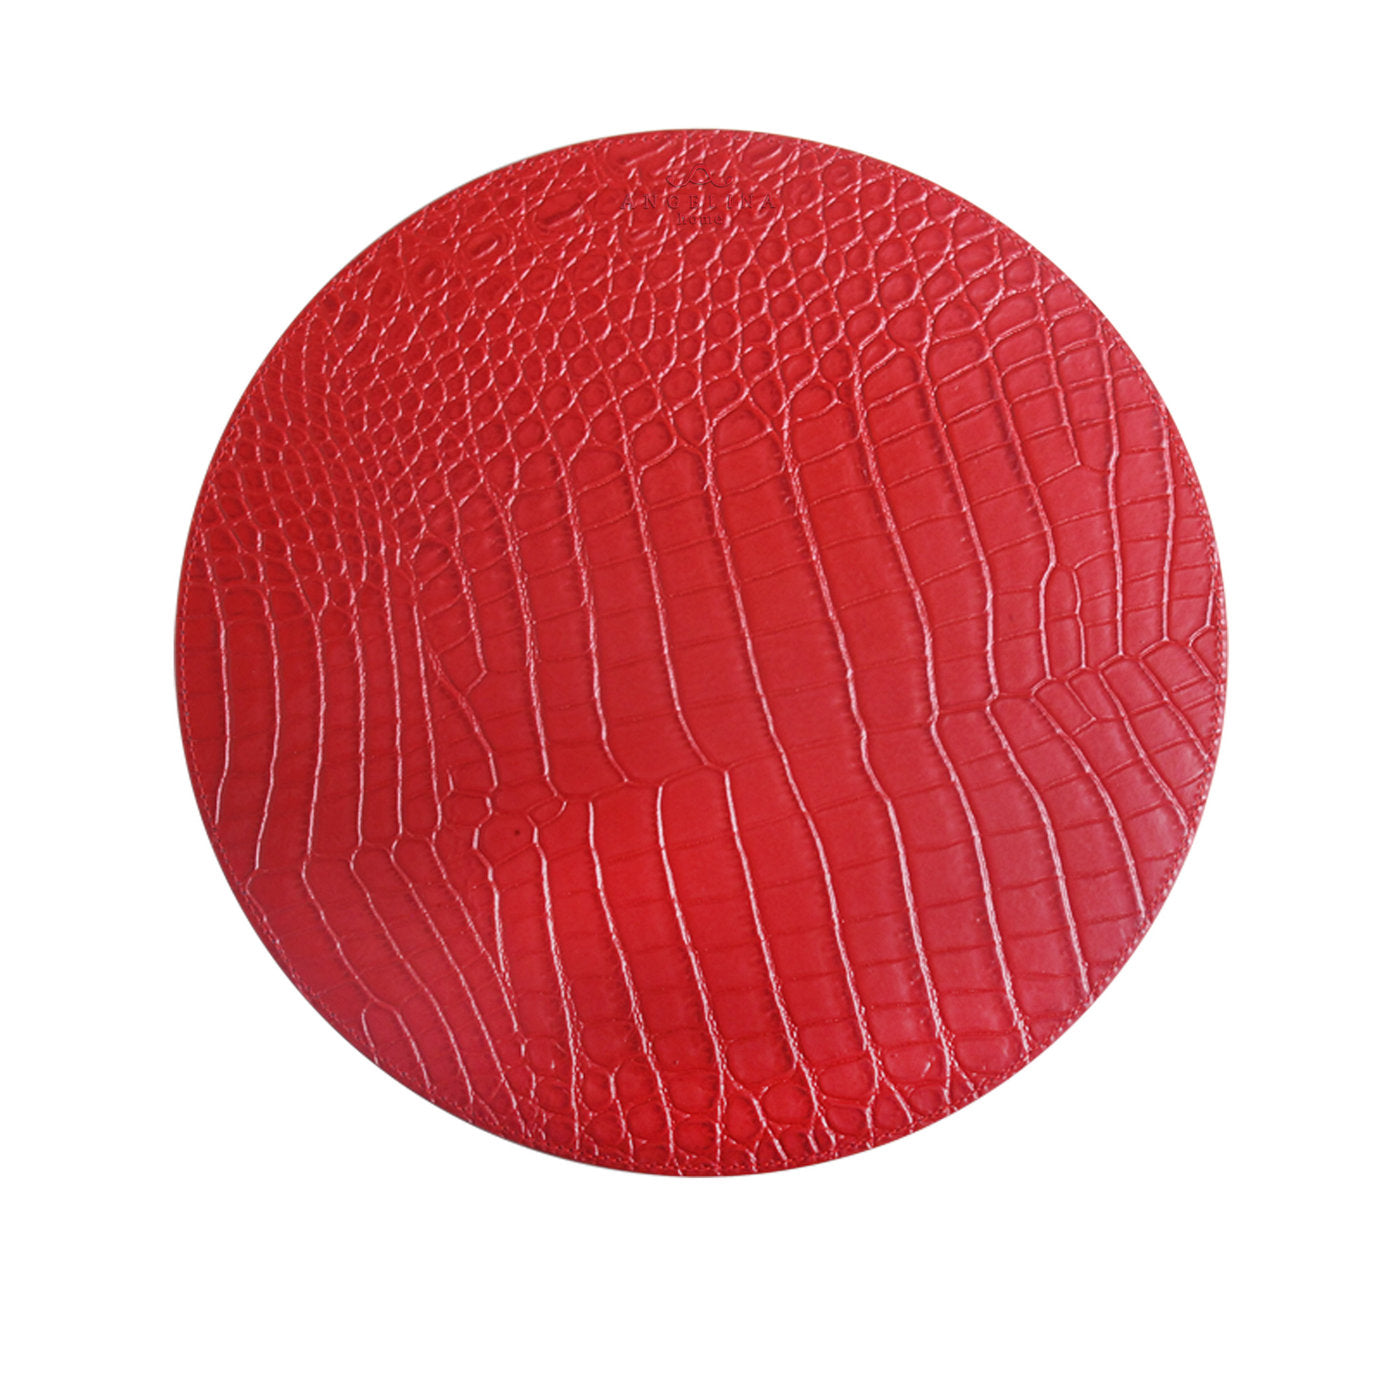 Kenya Medium Set of 2 Round Red Leather Placemats - Alternative view 2